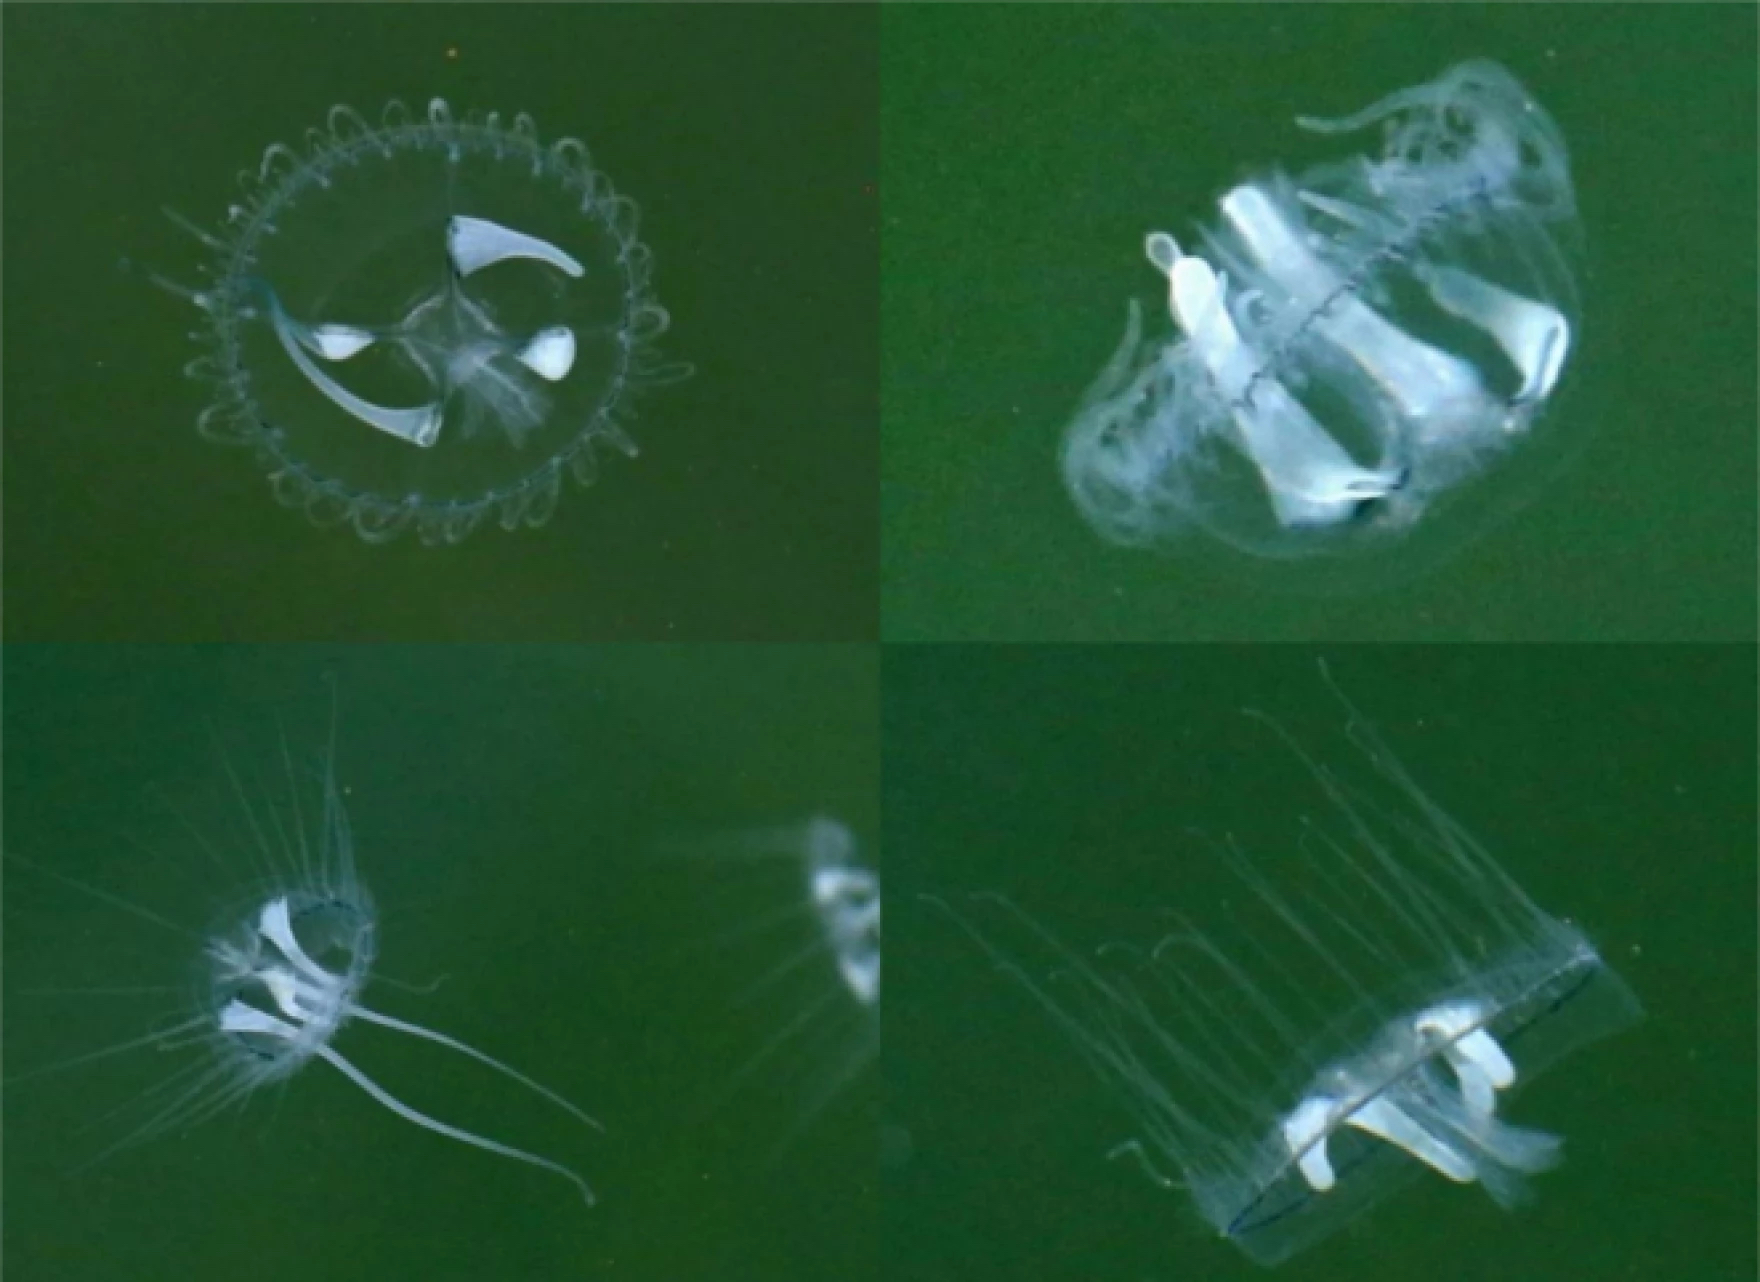 4 photos of translucent jellyfish